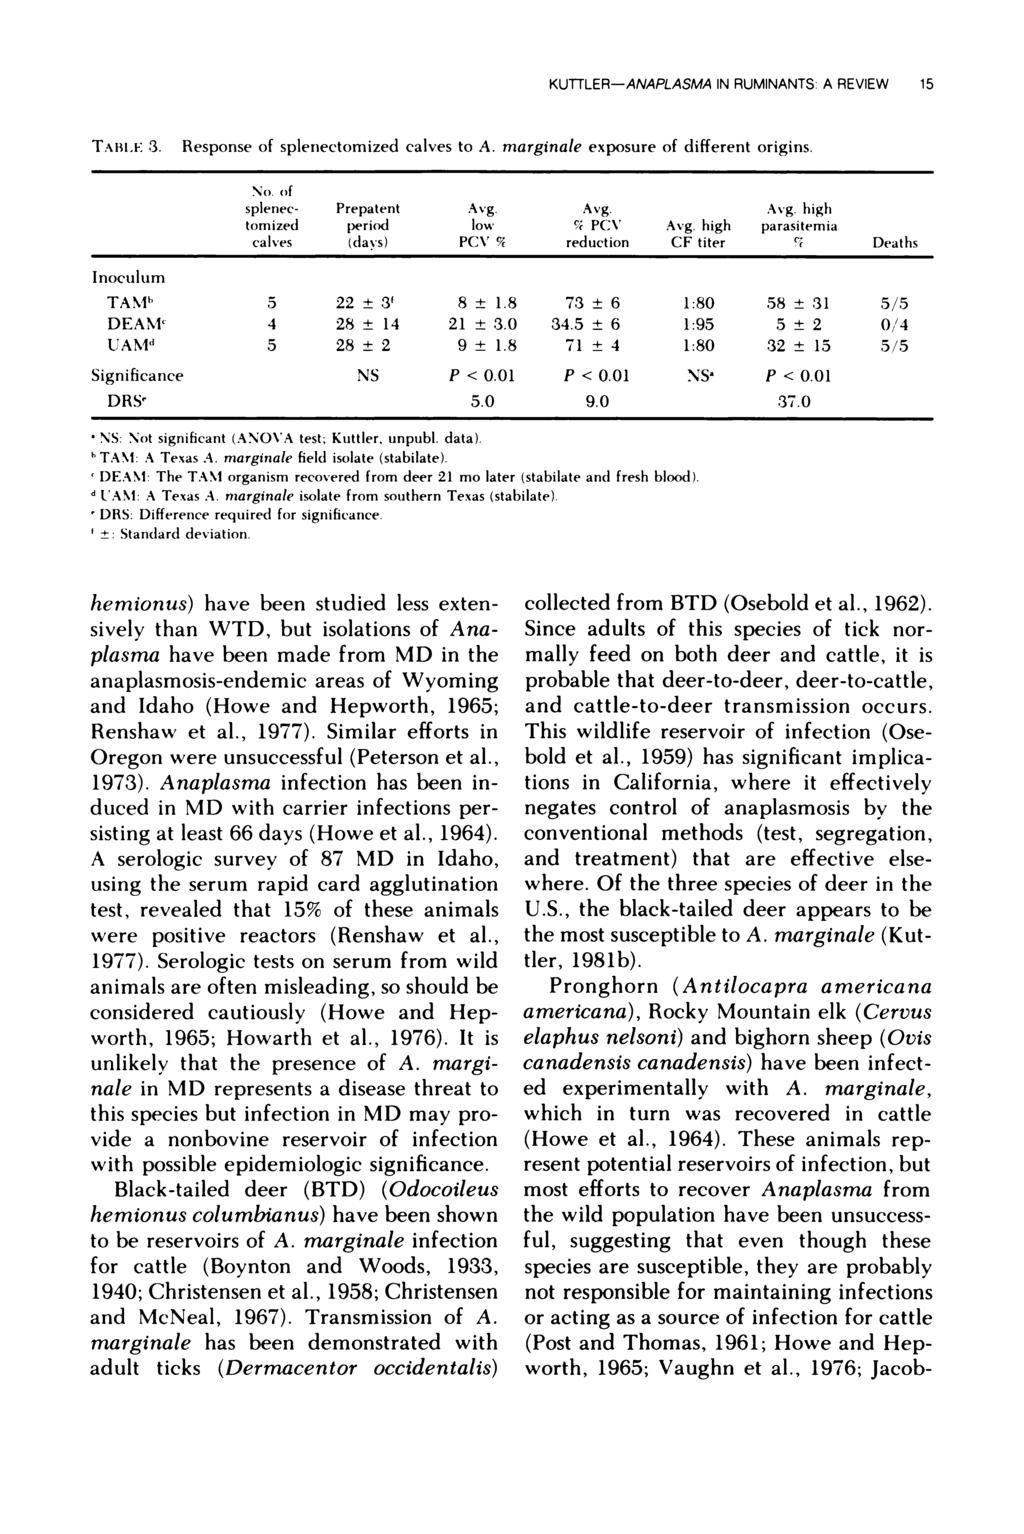 KUULER-ANAPLASMA IN RUMINANTS A REVIEW 15 TABlE 3. Response of splenectomized calves to marginale exposure of different origins. No. of splenec- Prepatent Avg. Avg. Avg. high tomized period low 9 PCV Avg.